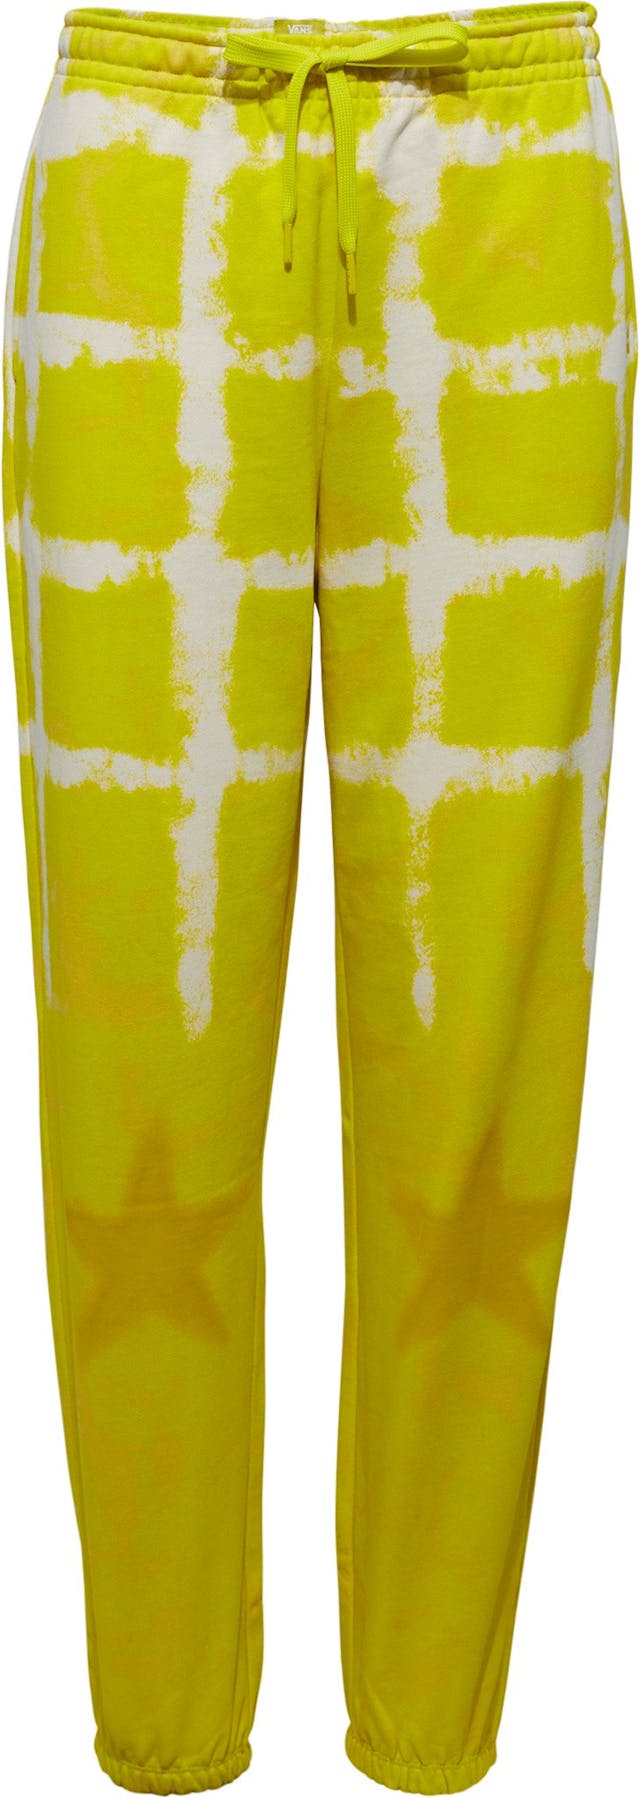 Product image for Collina Strada Sweatpants - Women's